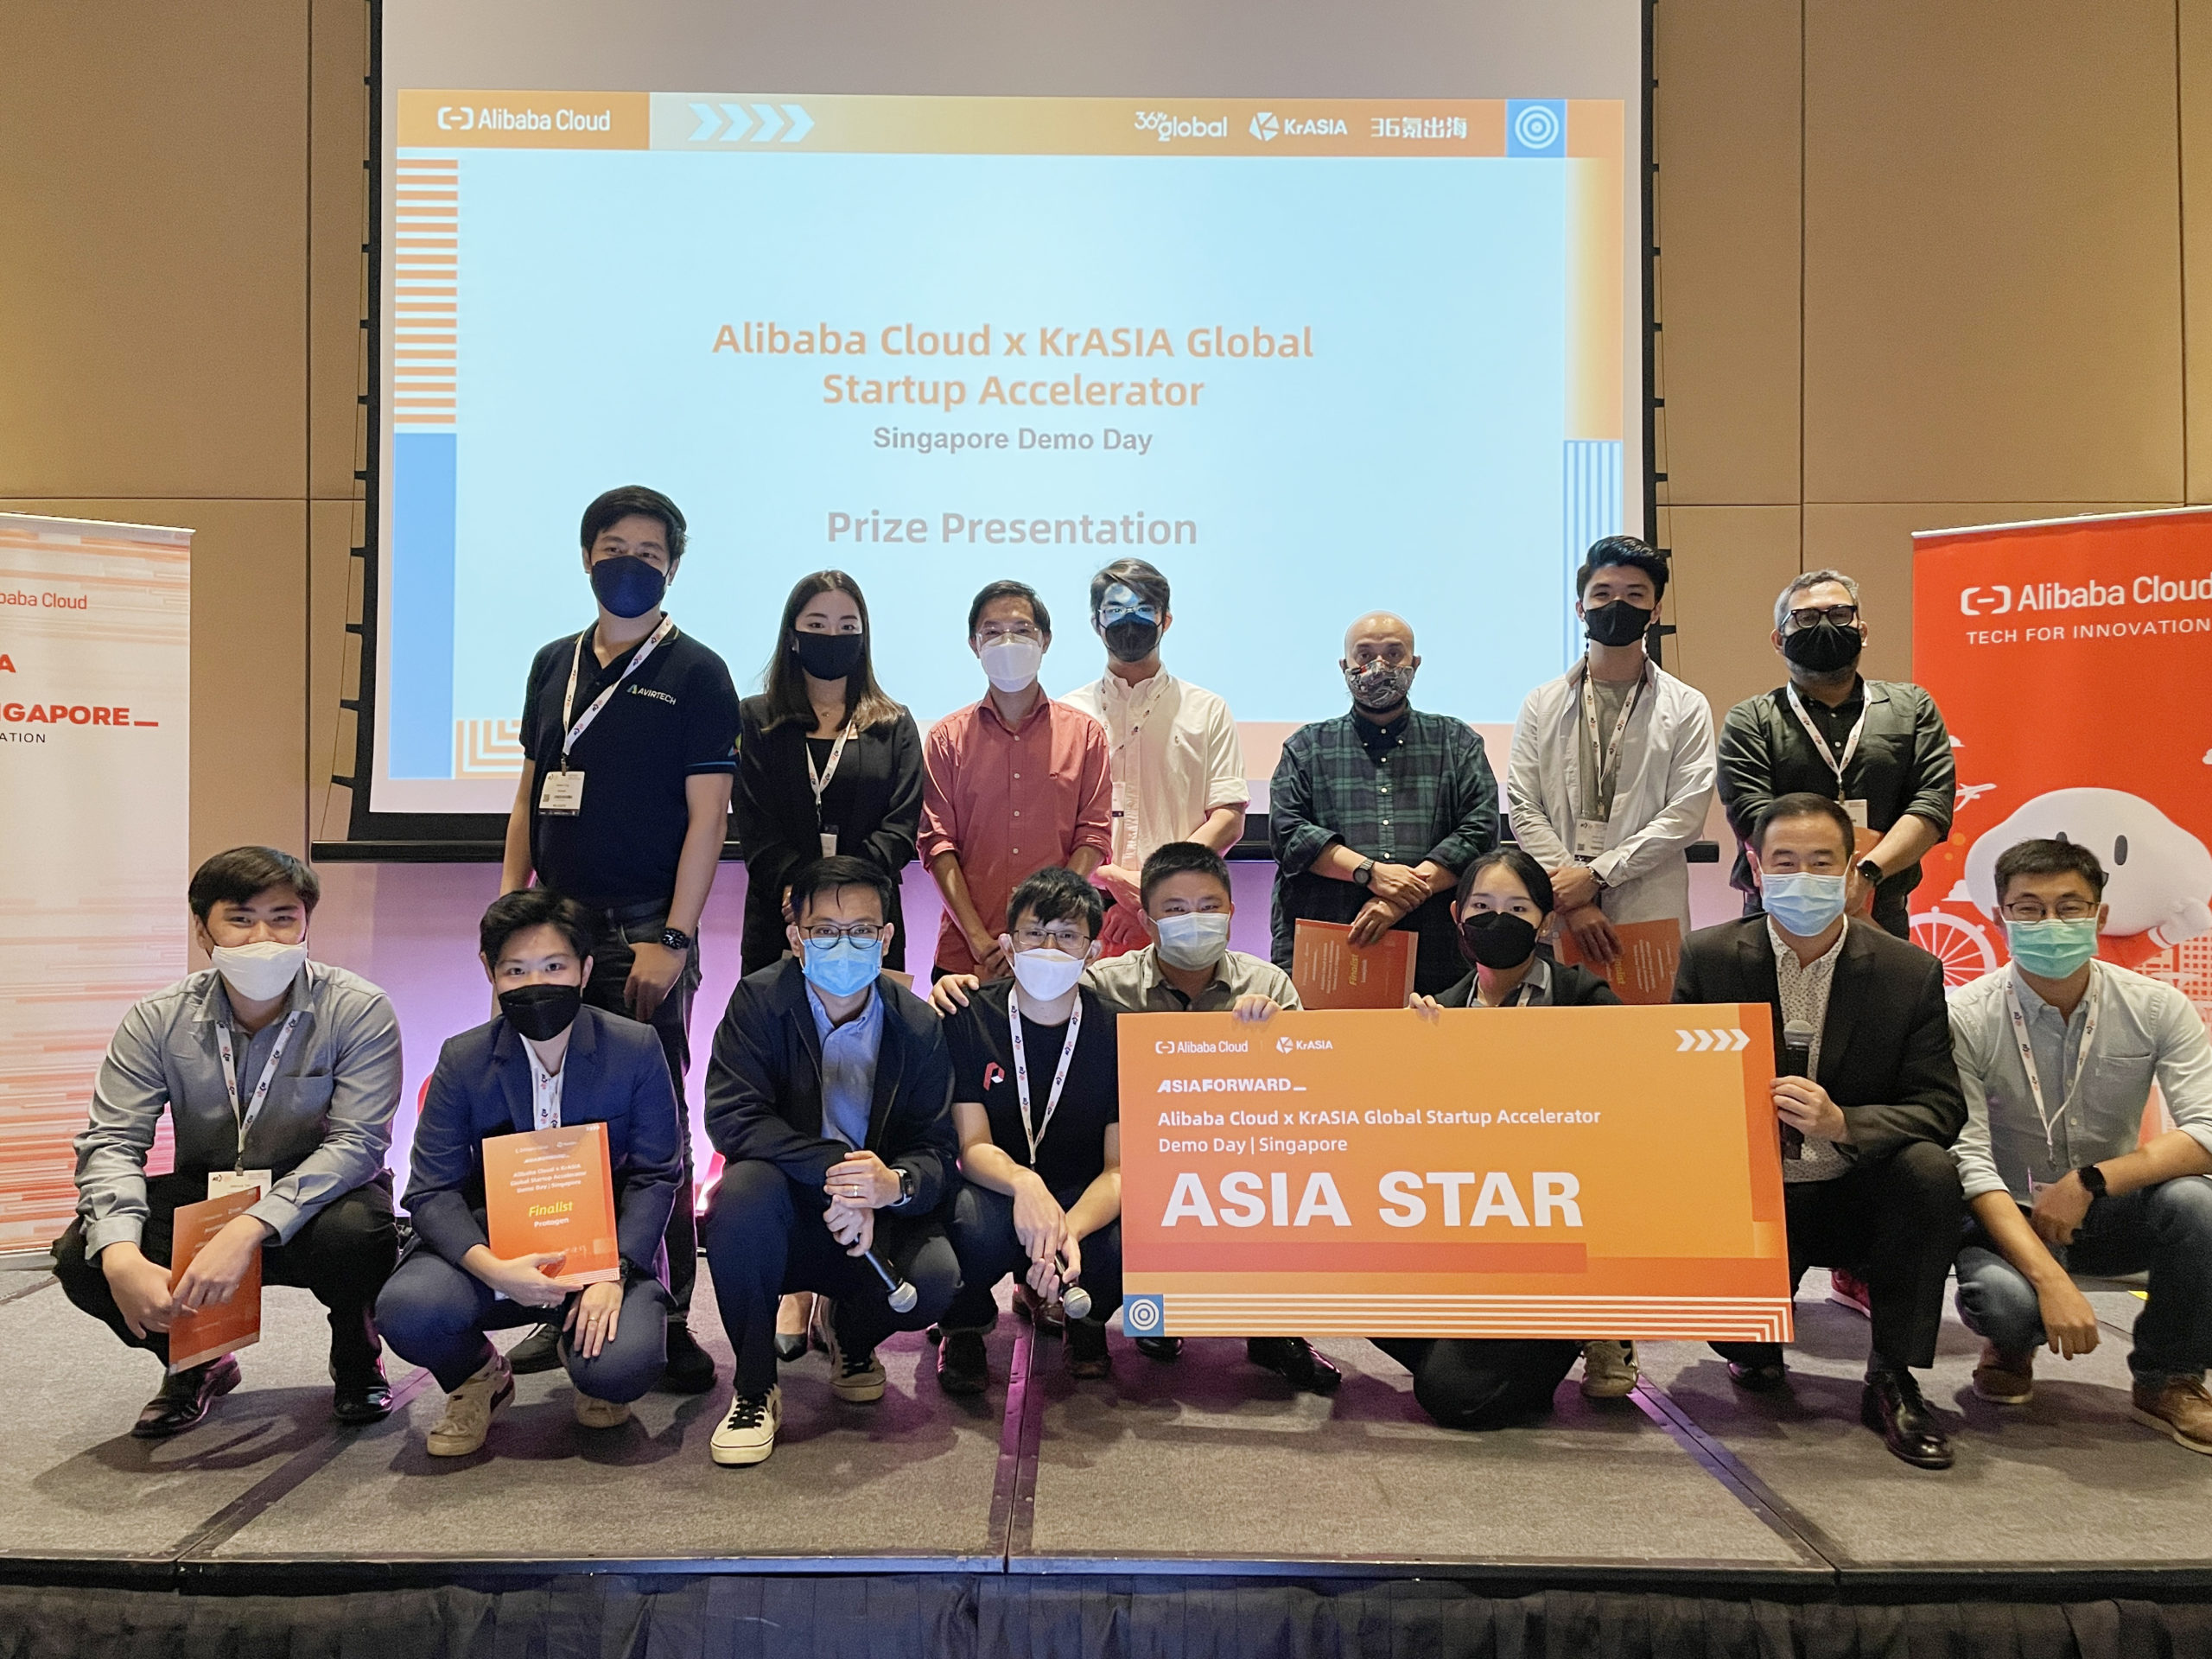 Meet ConcreteAI, Asia Star of the Alibaba Cloud x KrASIA Global Startup Accelerator Singapore Demo Day